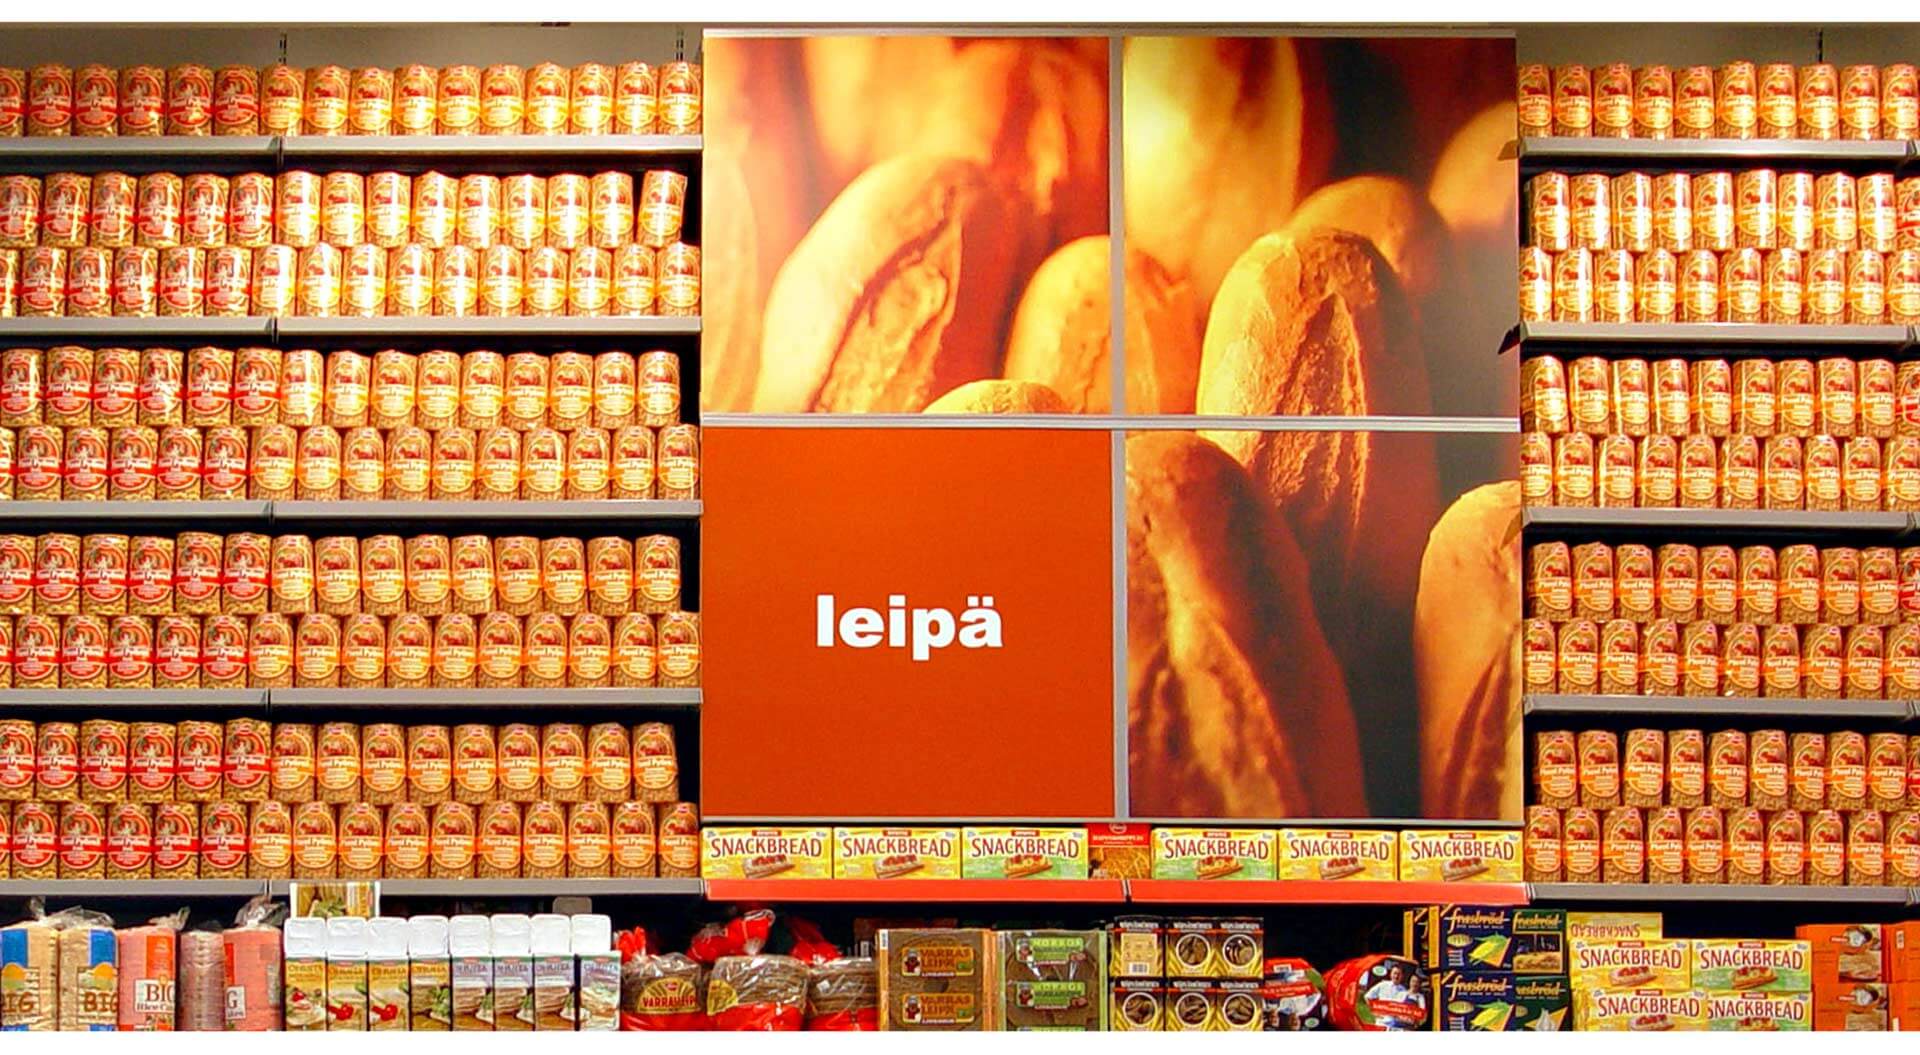 K CityMarket hypermarket Finland, bread department merchandising and branding